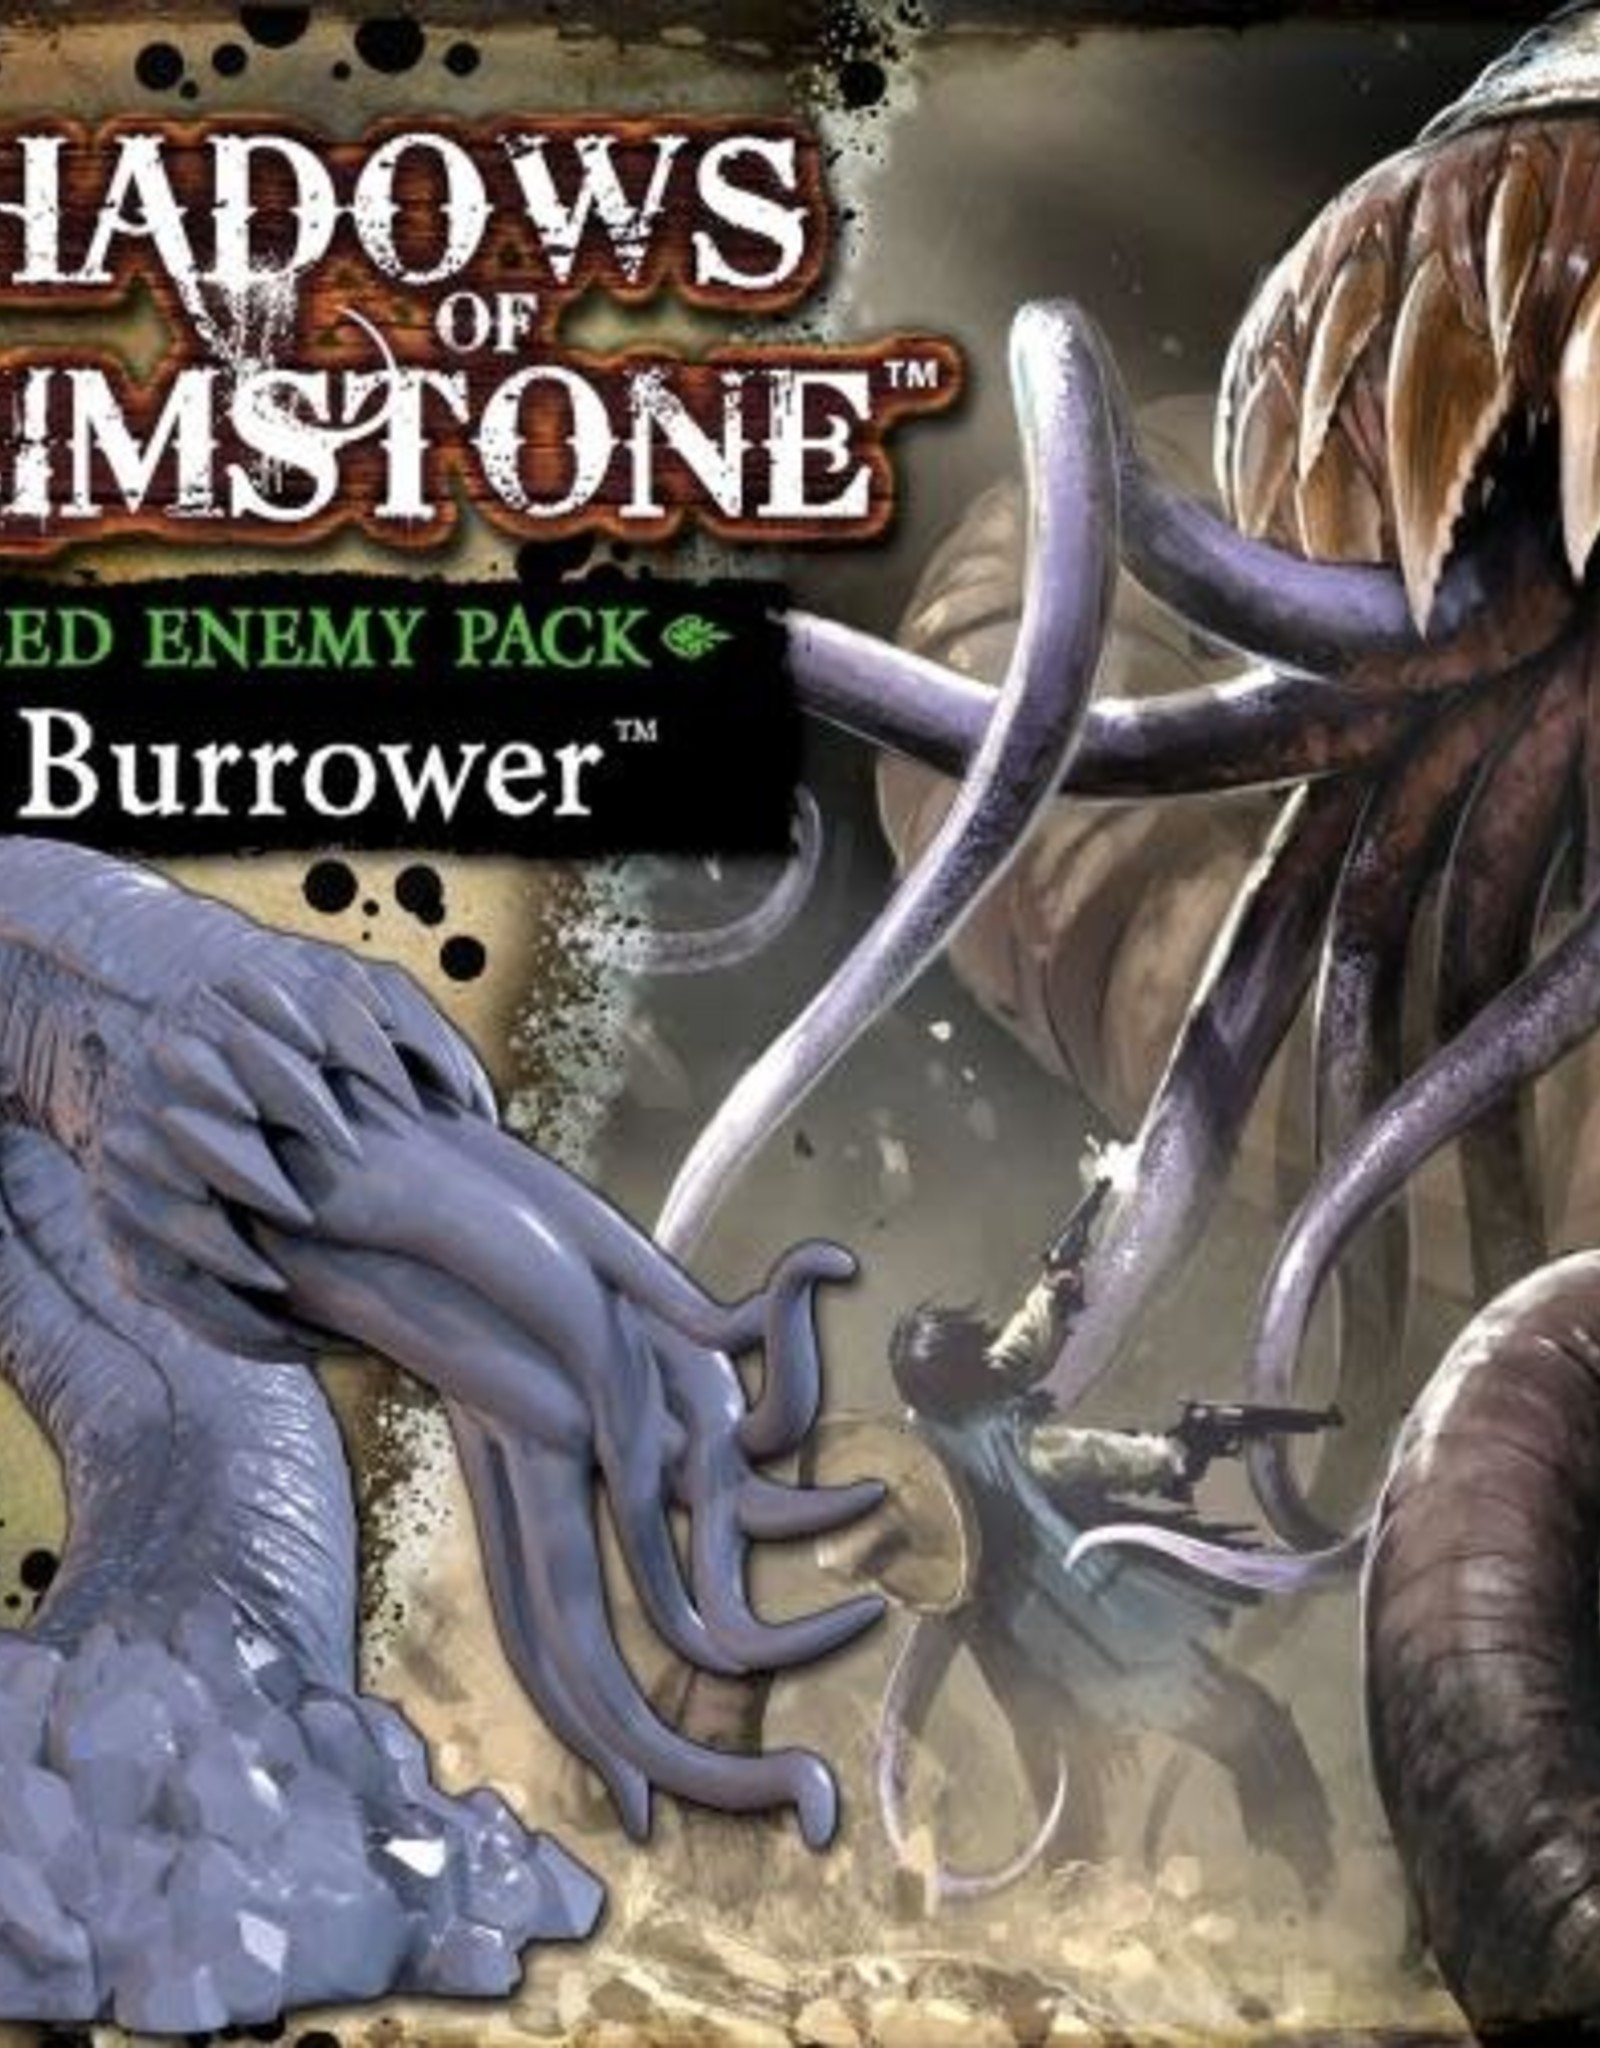 Shadows of Brimstone: Burrower XXL Sized Enemy Pack